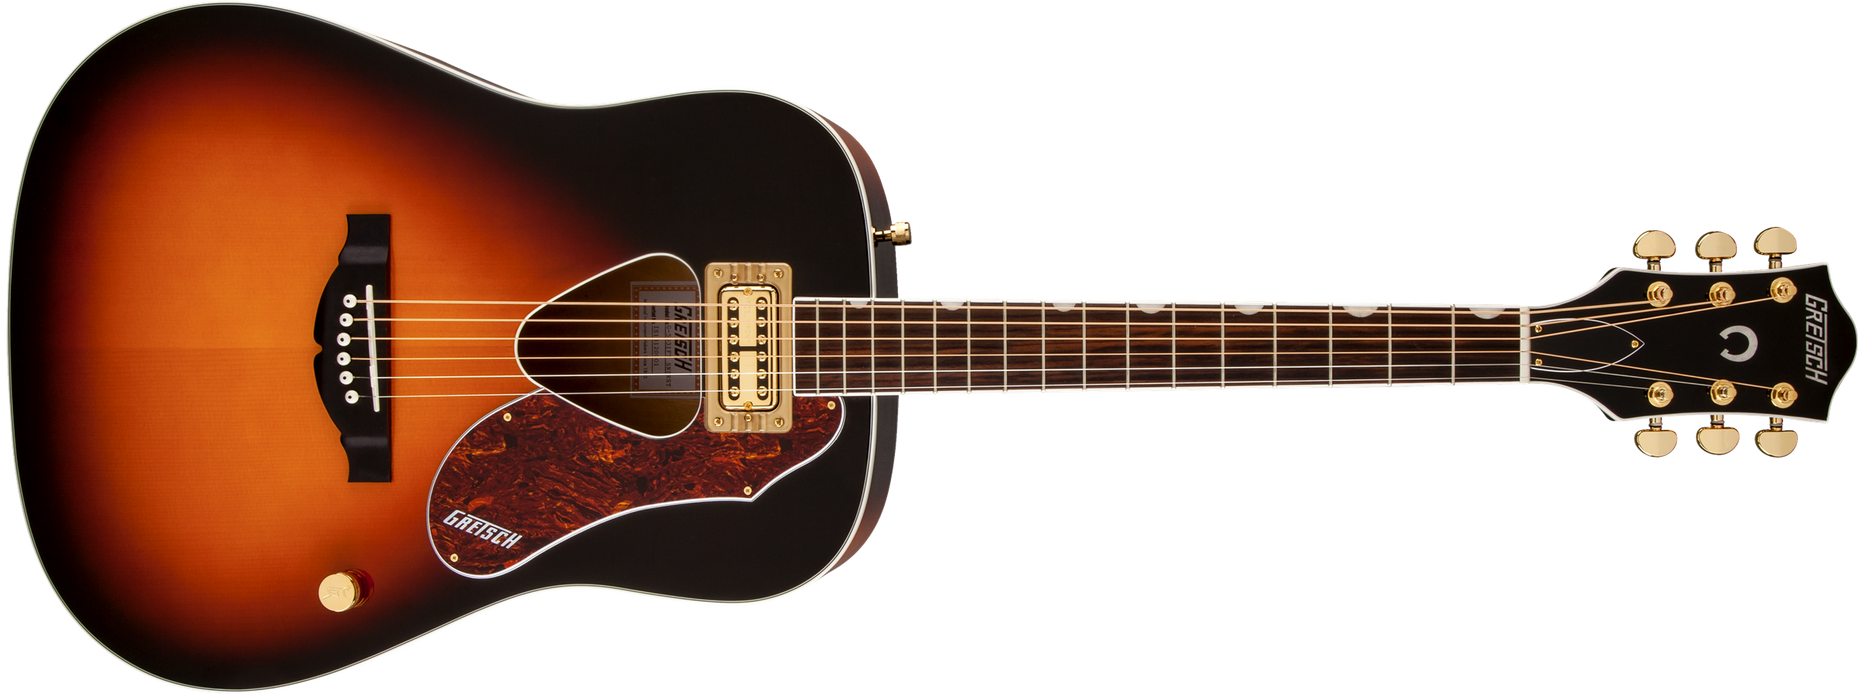 Gretsch G5031FT Rancher™ Dreadnought Acoustic Guitar - Fideli-Tron Pickup, Sunburst